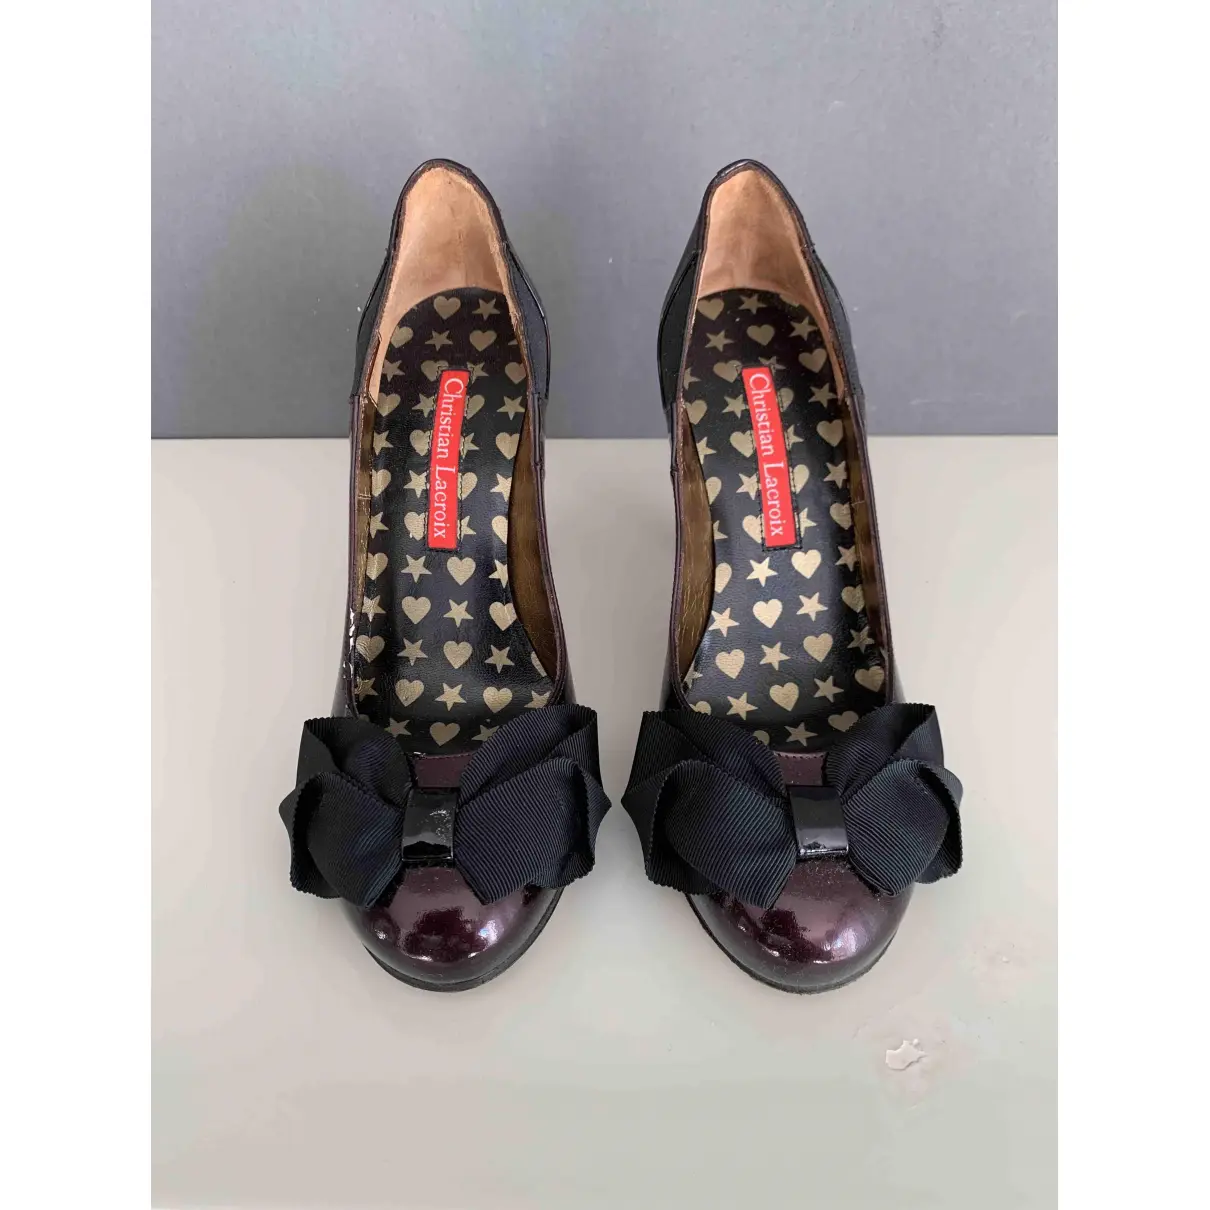 Buy Christian Lacroix Patent leather heels online - Vintage